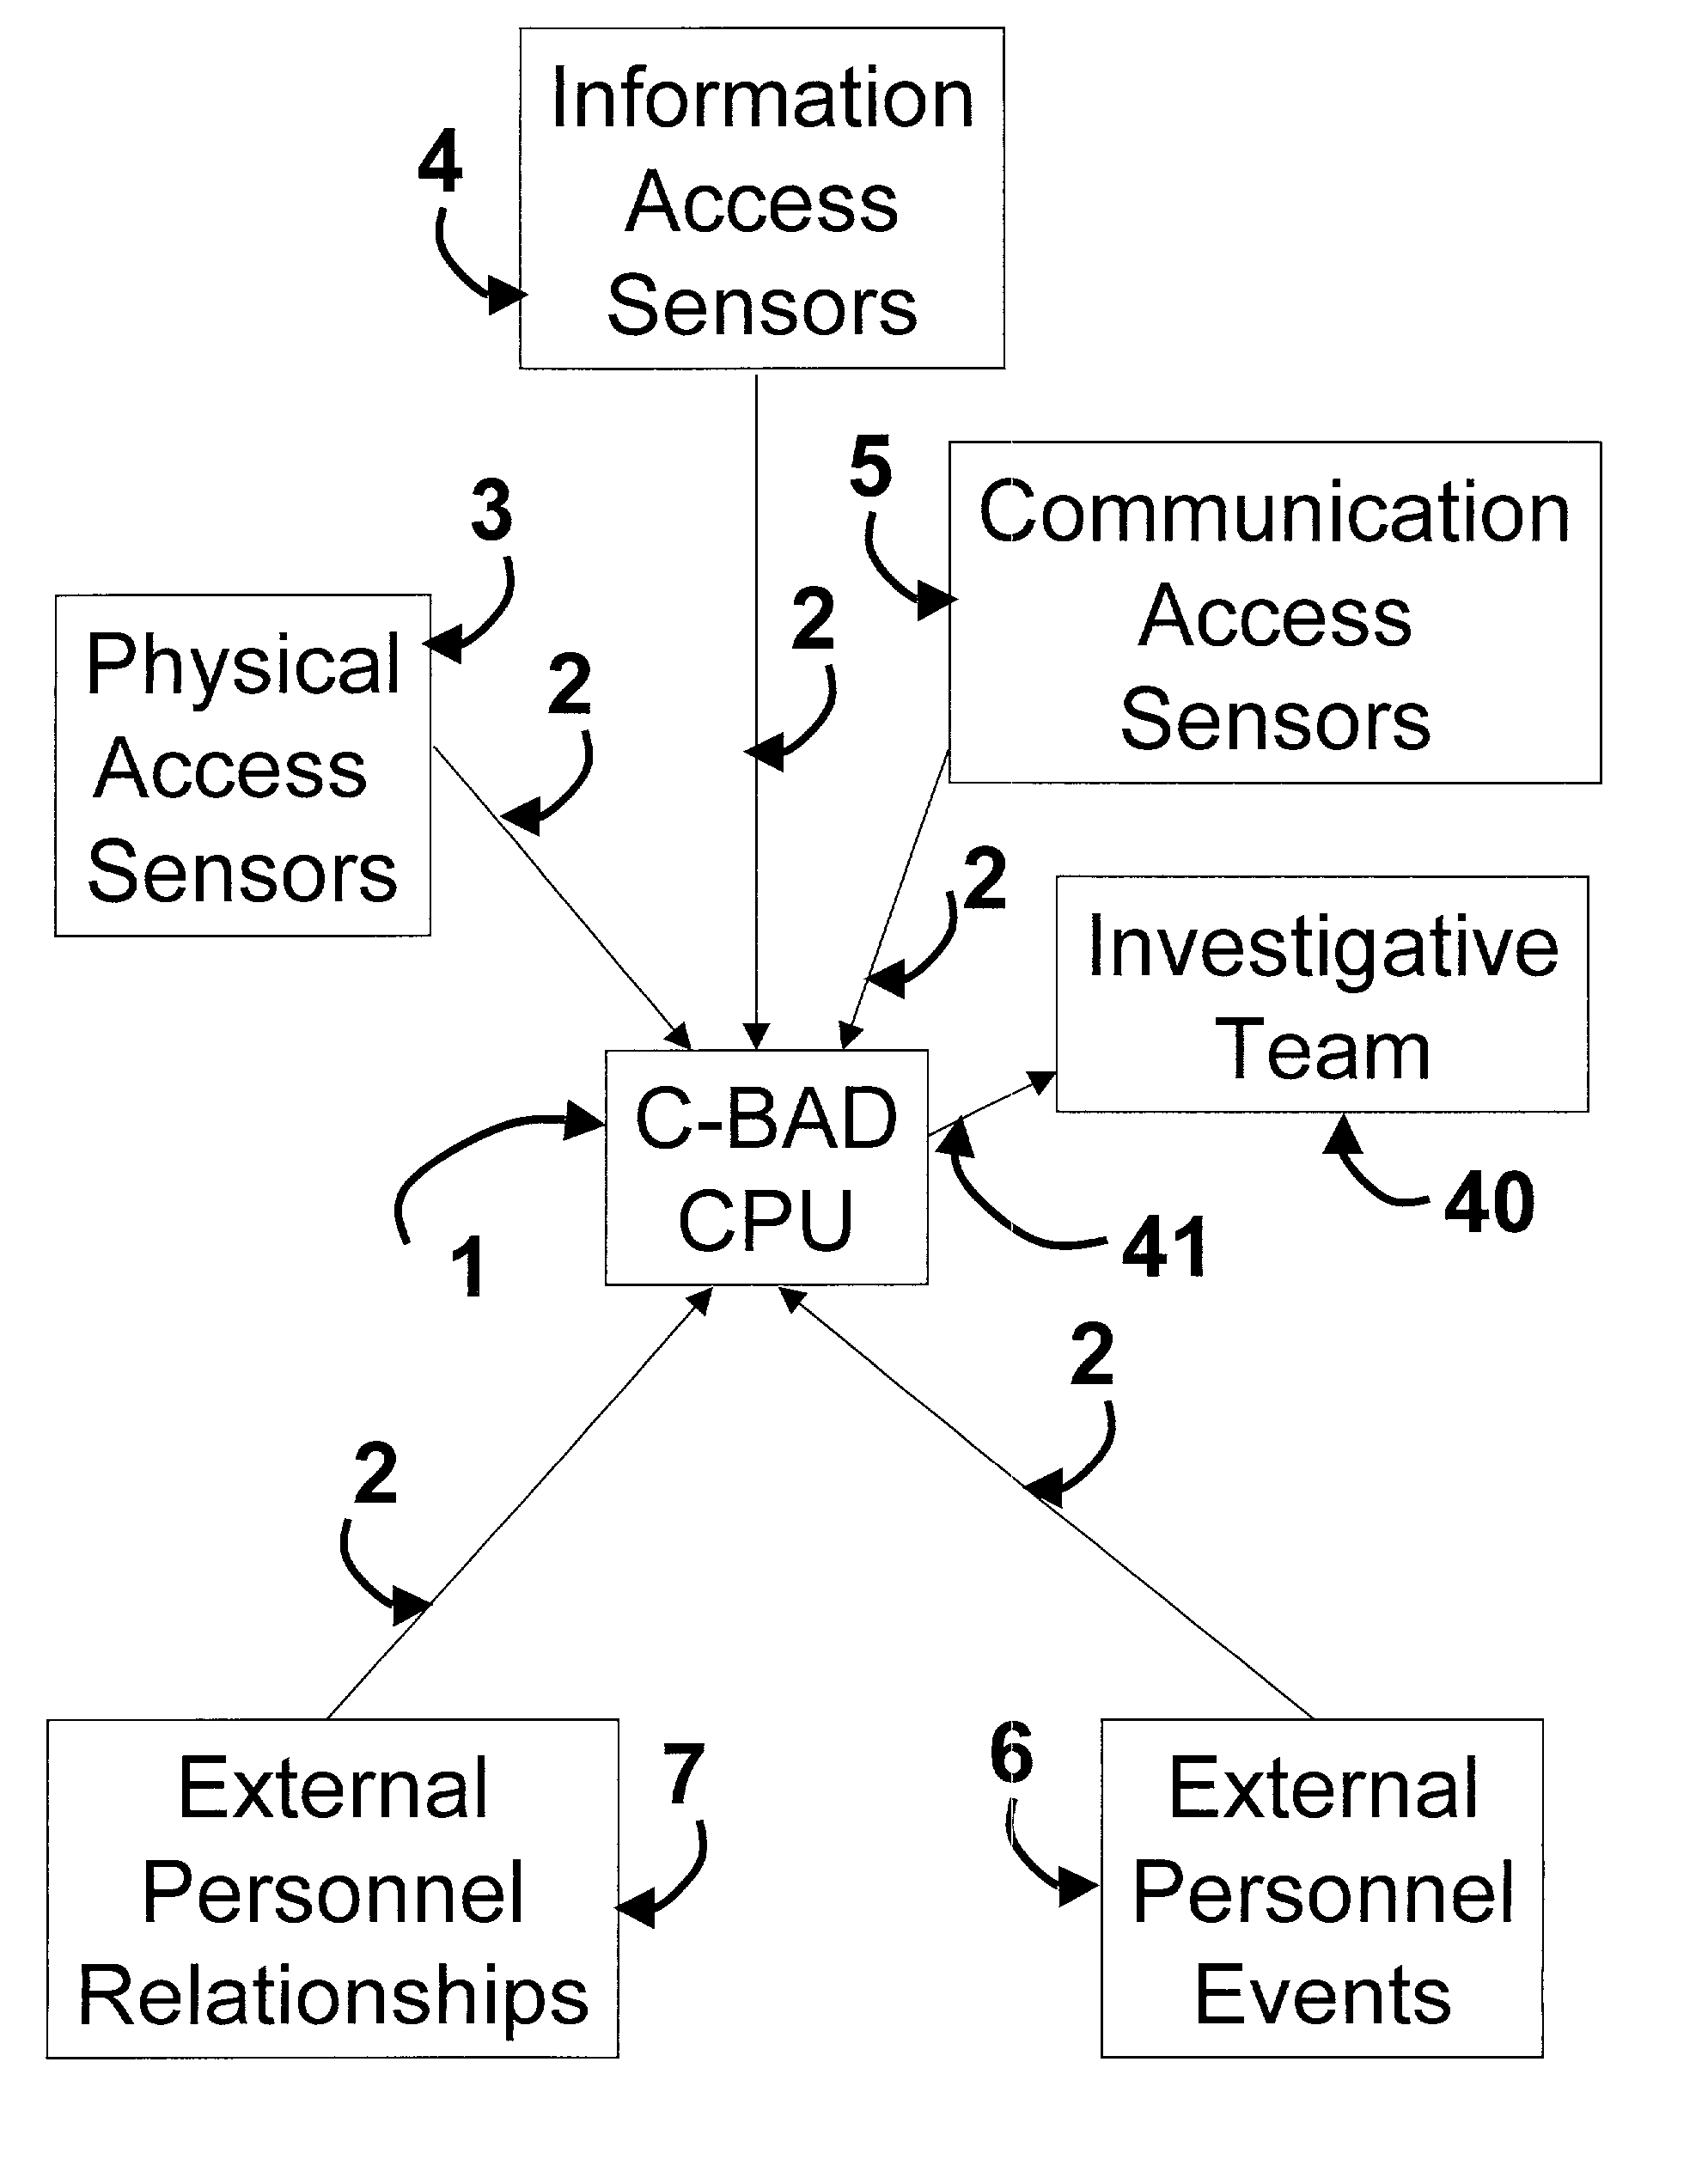 Cooperative biometrics abnormality detection system (C-BAD)